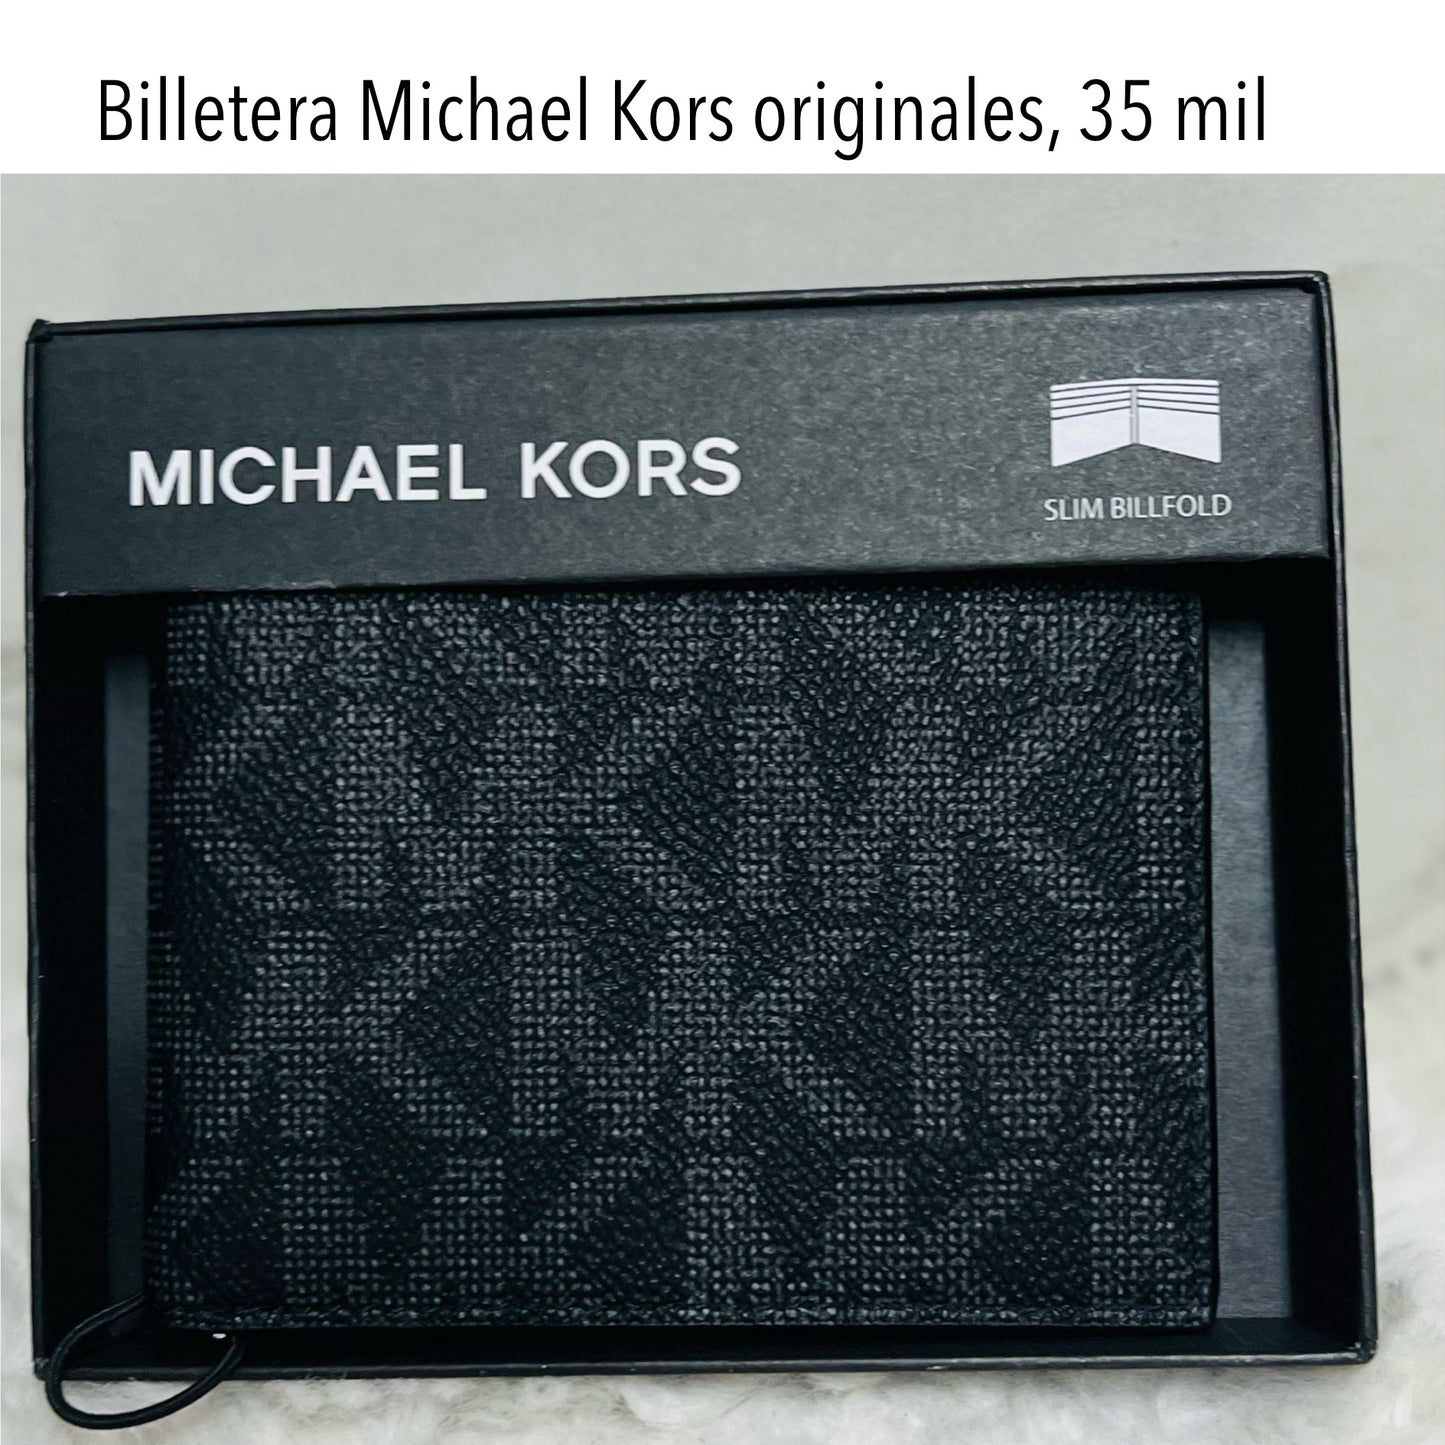 Billetera MK negra